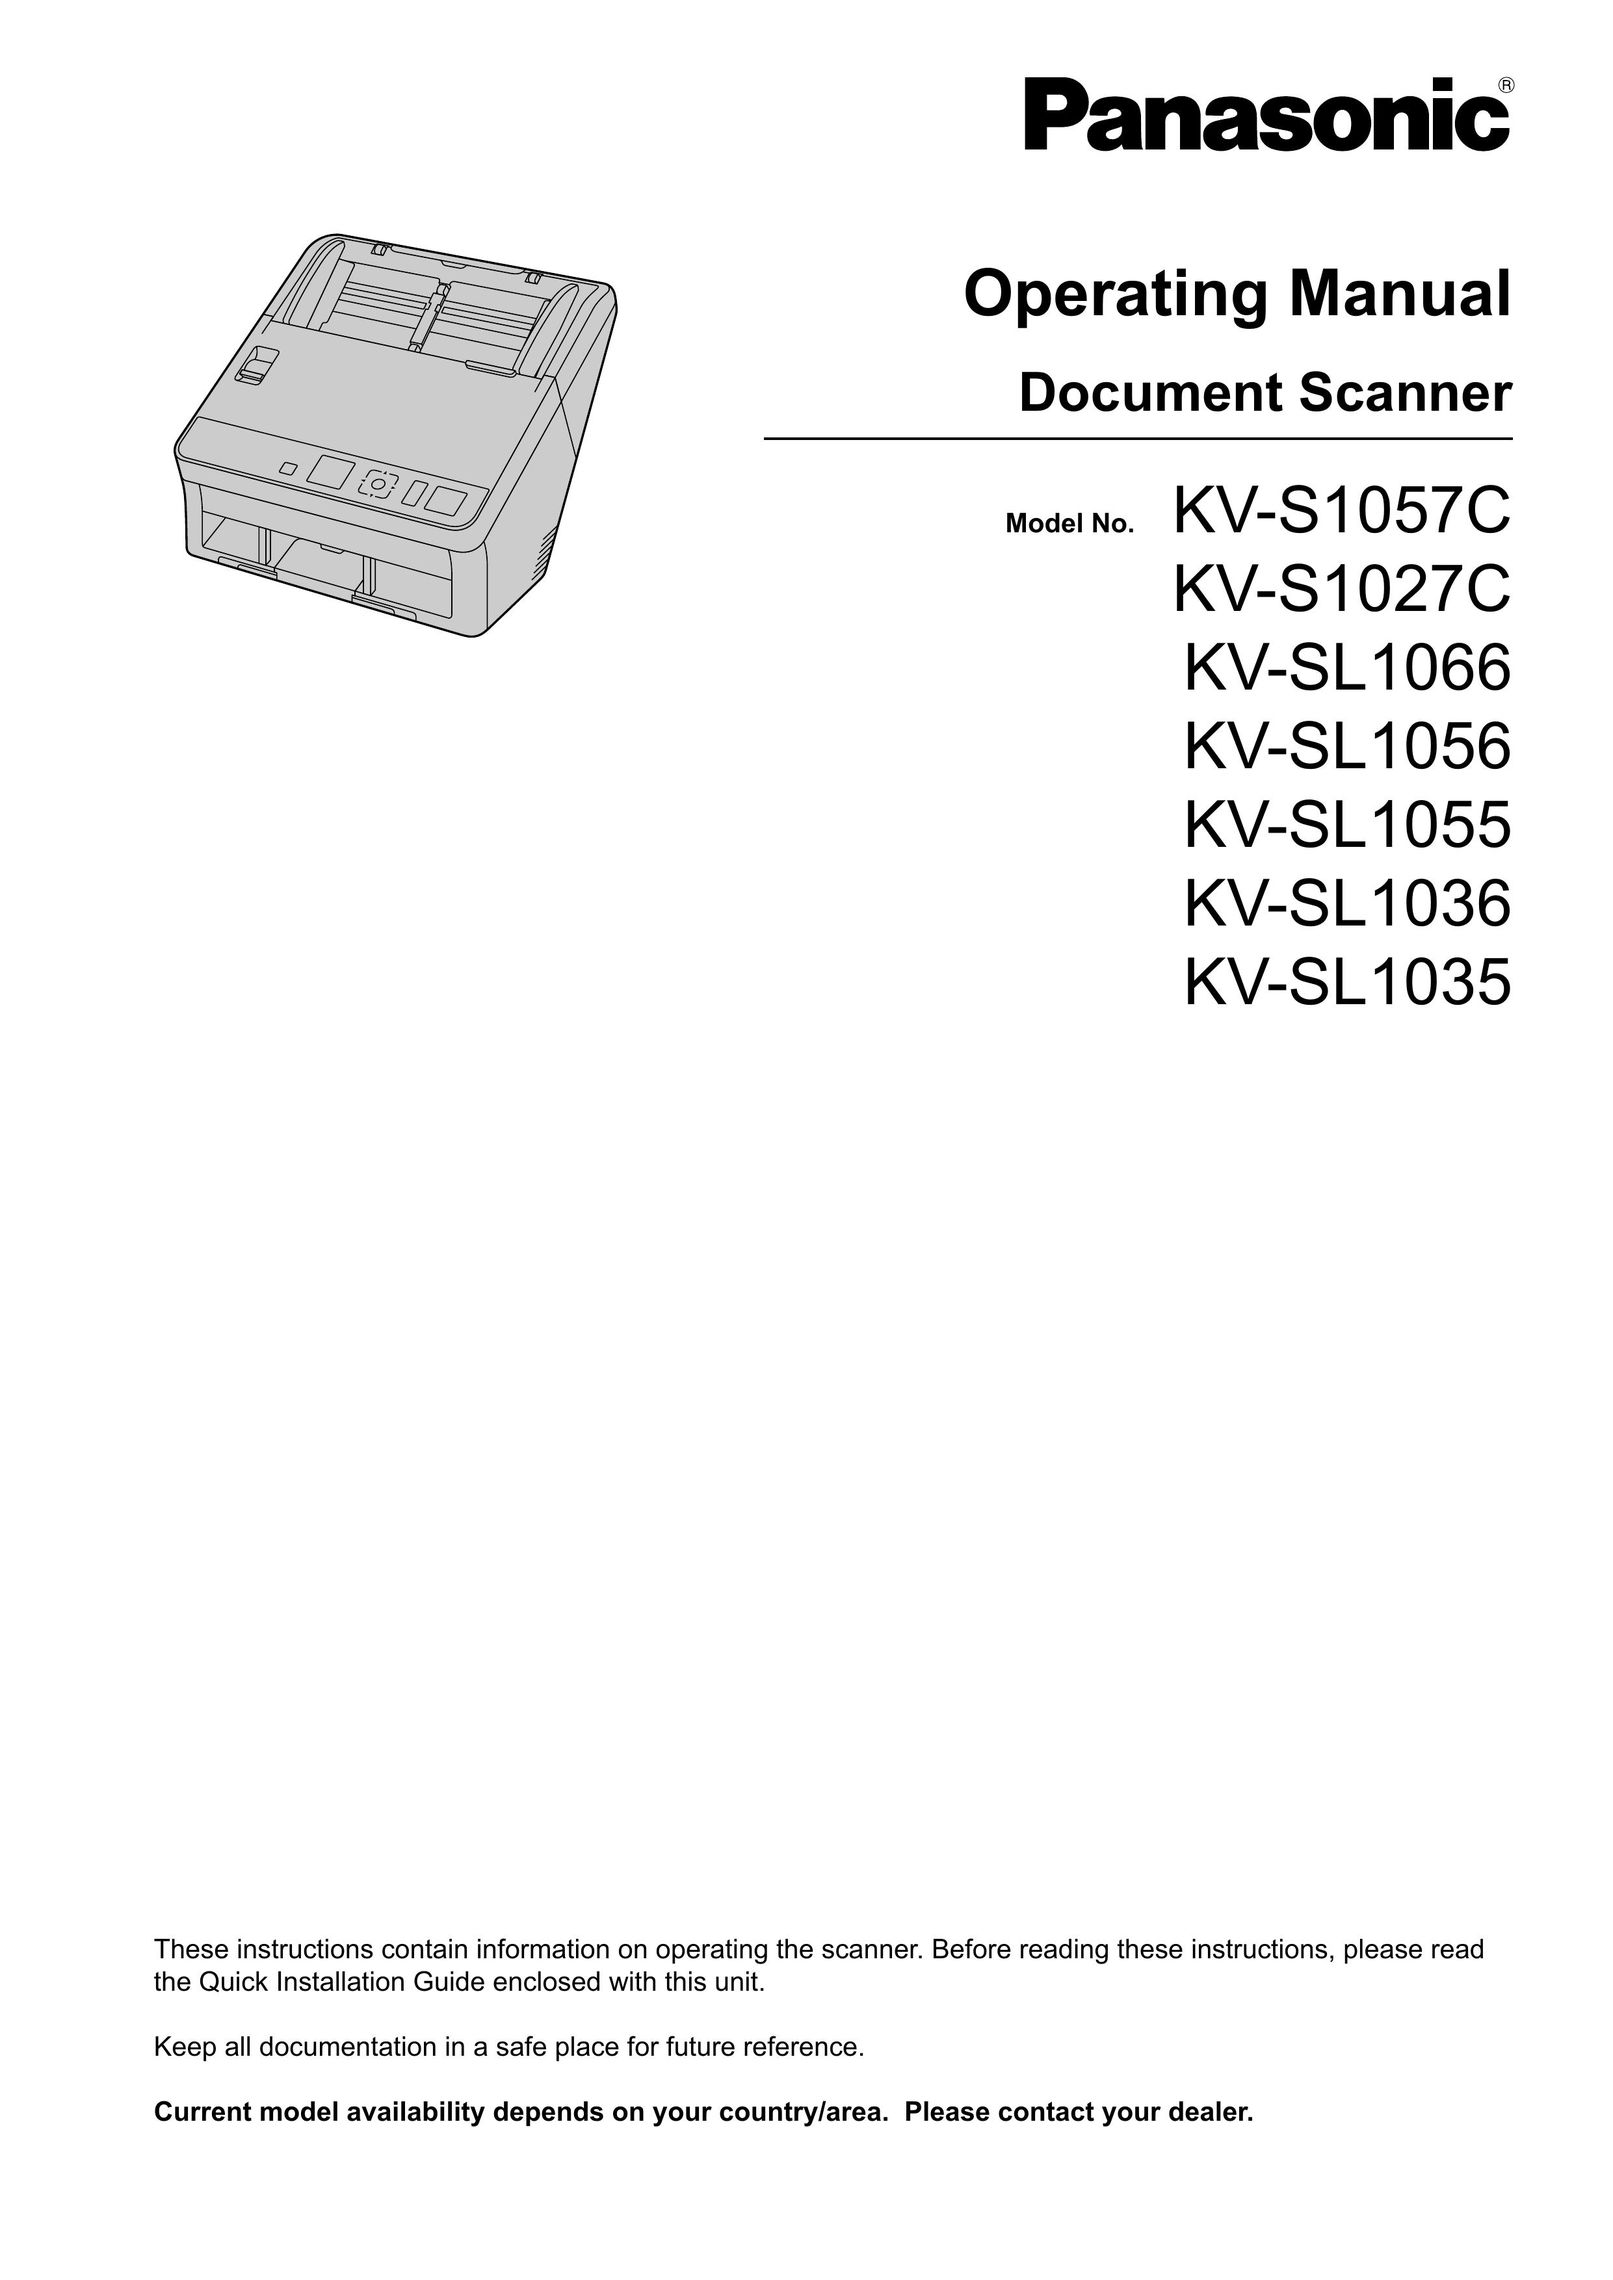 Panasonic KV-SL1056 Scanner User Manual